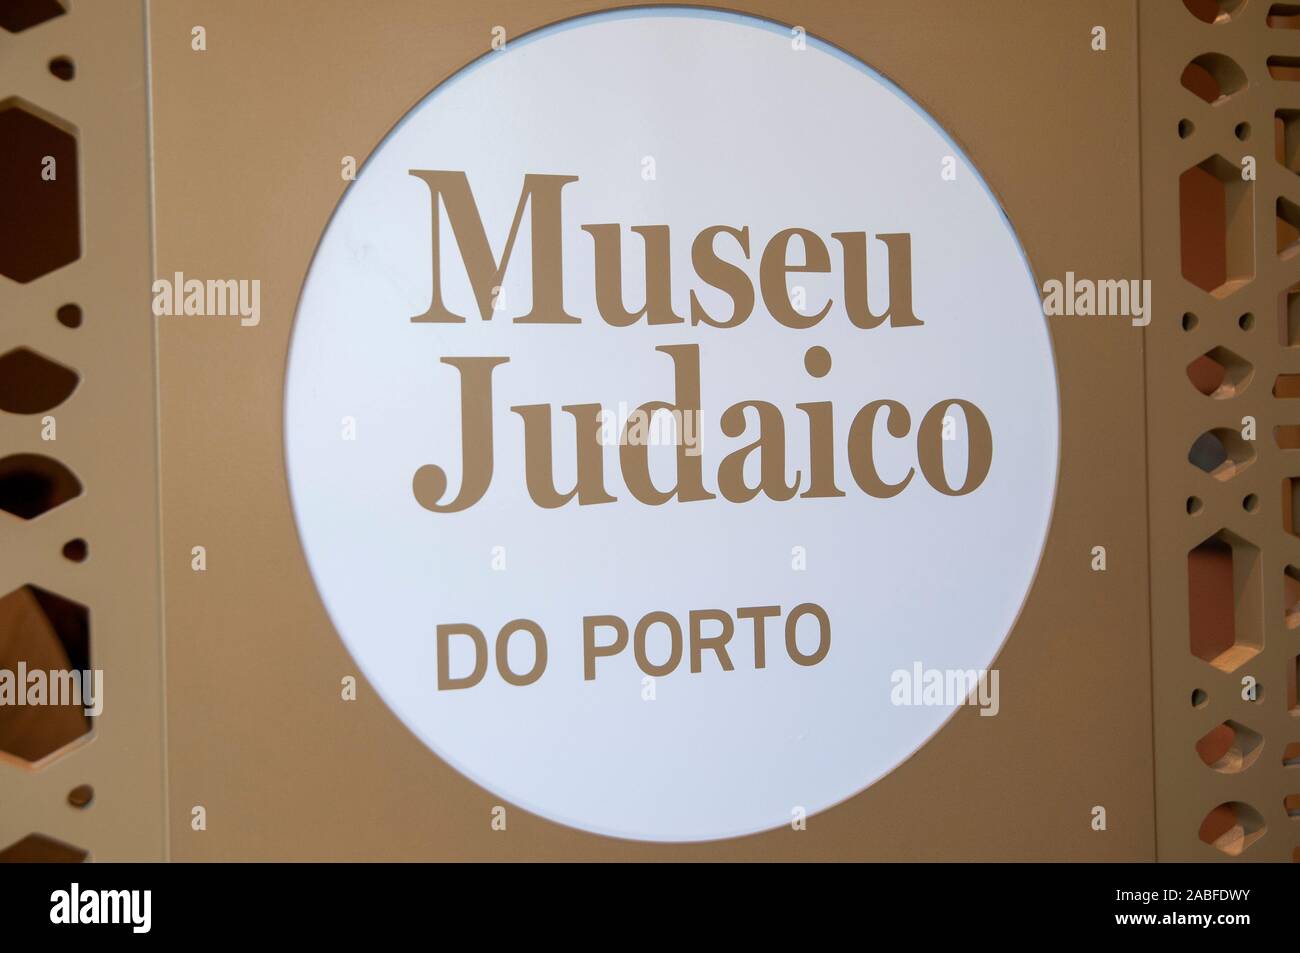 Museu Judaico do Porto. Le Musée Juif de Porto, Portugal Banque D'Images